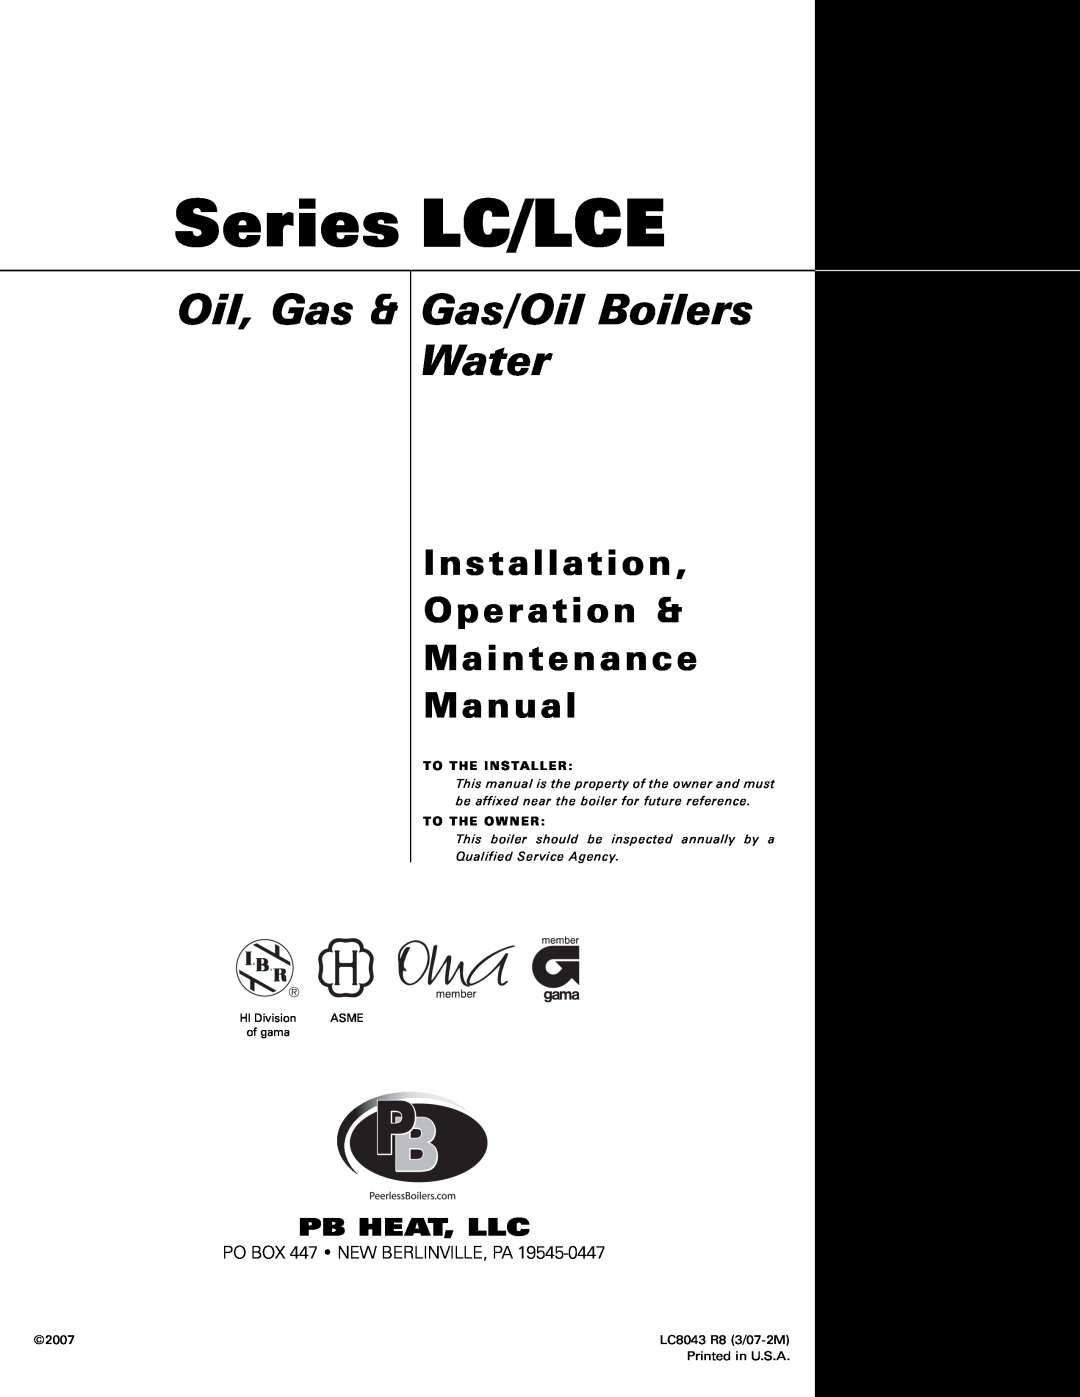 PB Heat Oil, Gas & Gas/Oil Boilers Water, Series LC/LCE, Installation Operation & Maintenance Manual, Pb Heat, Llc 